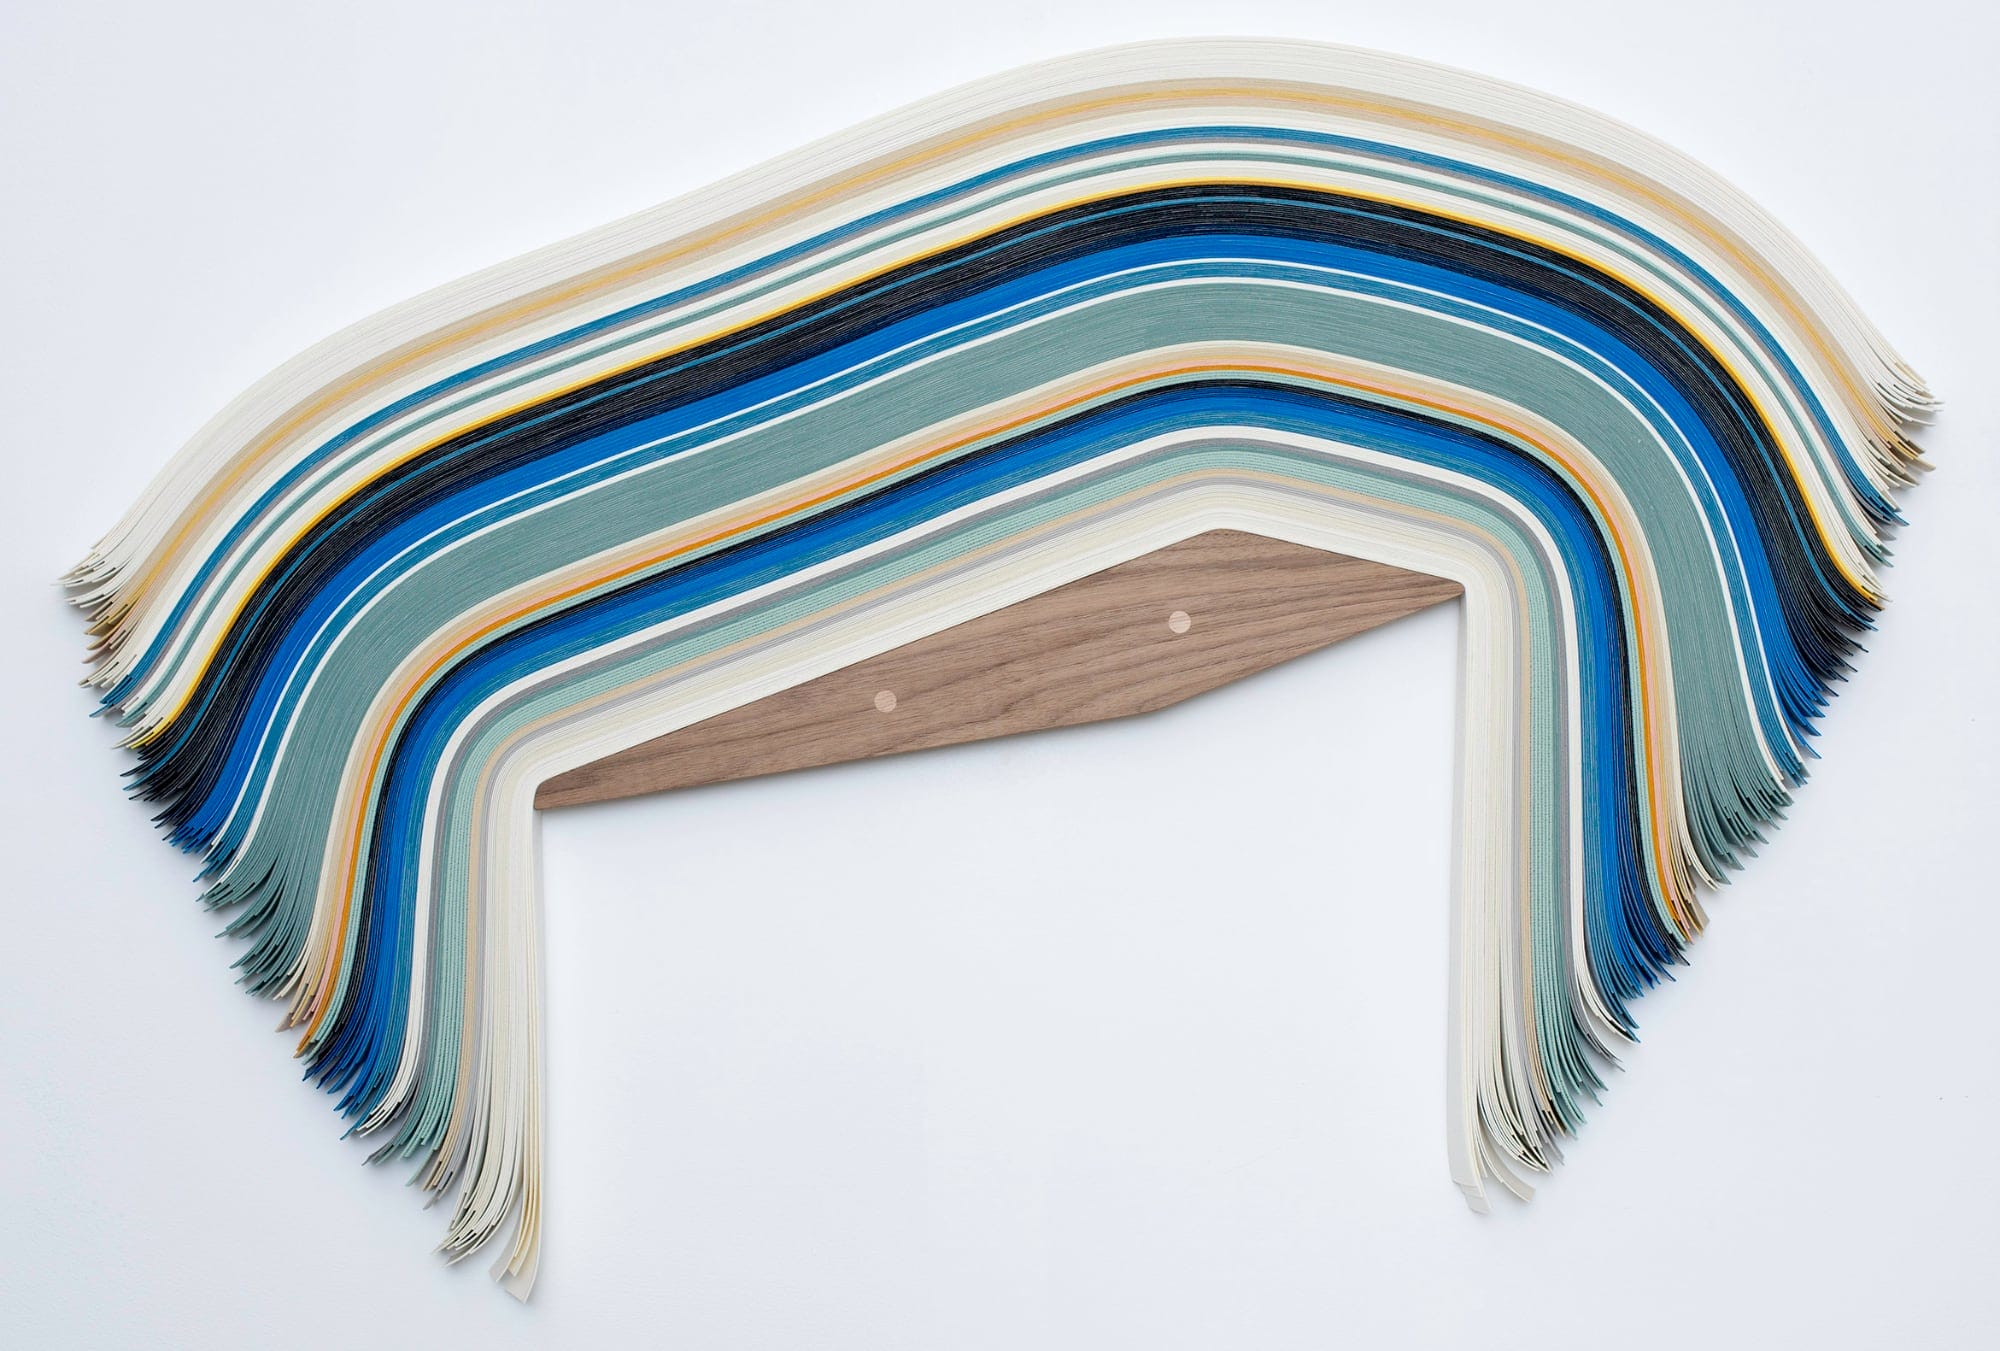 blue, gray, tan, and beige vinyl strips slump in a striped pattern across a wooden triangle